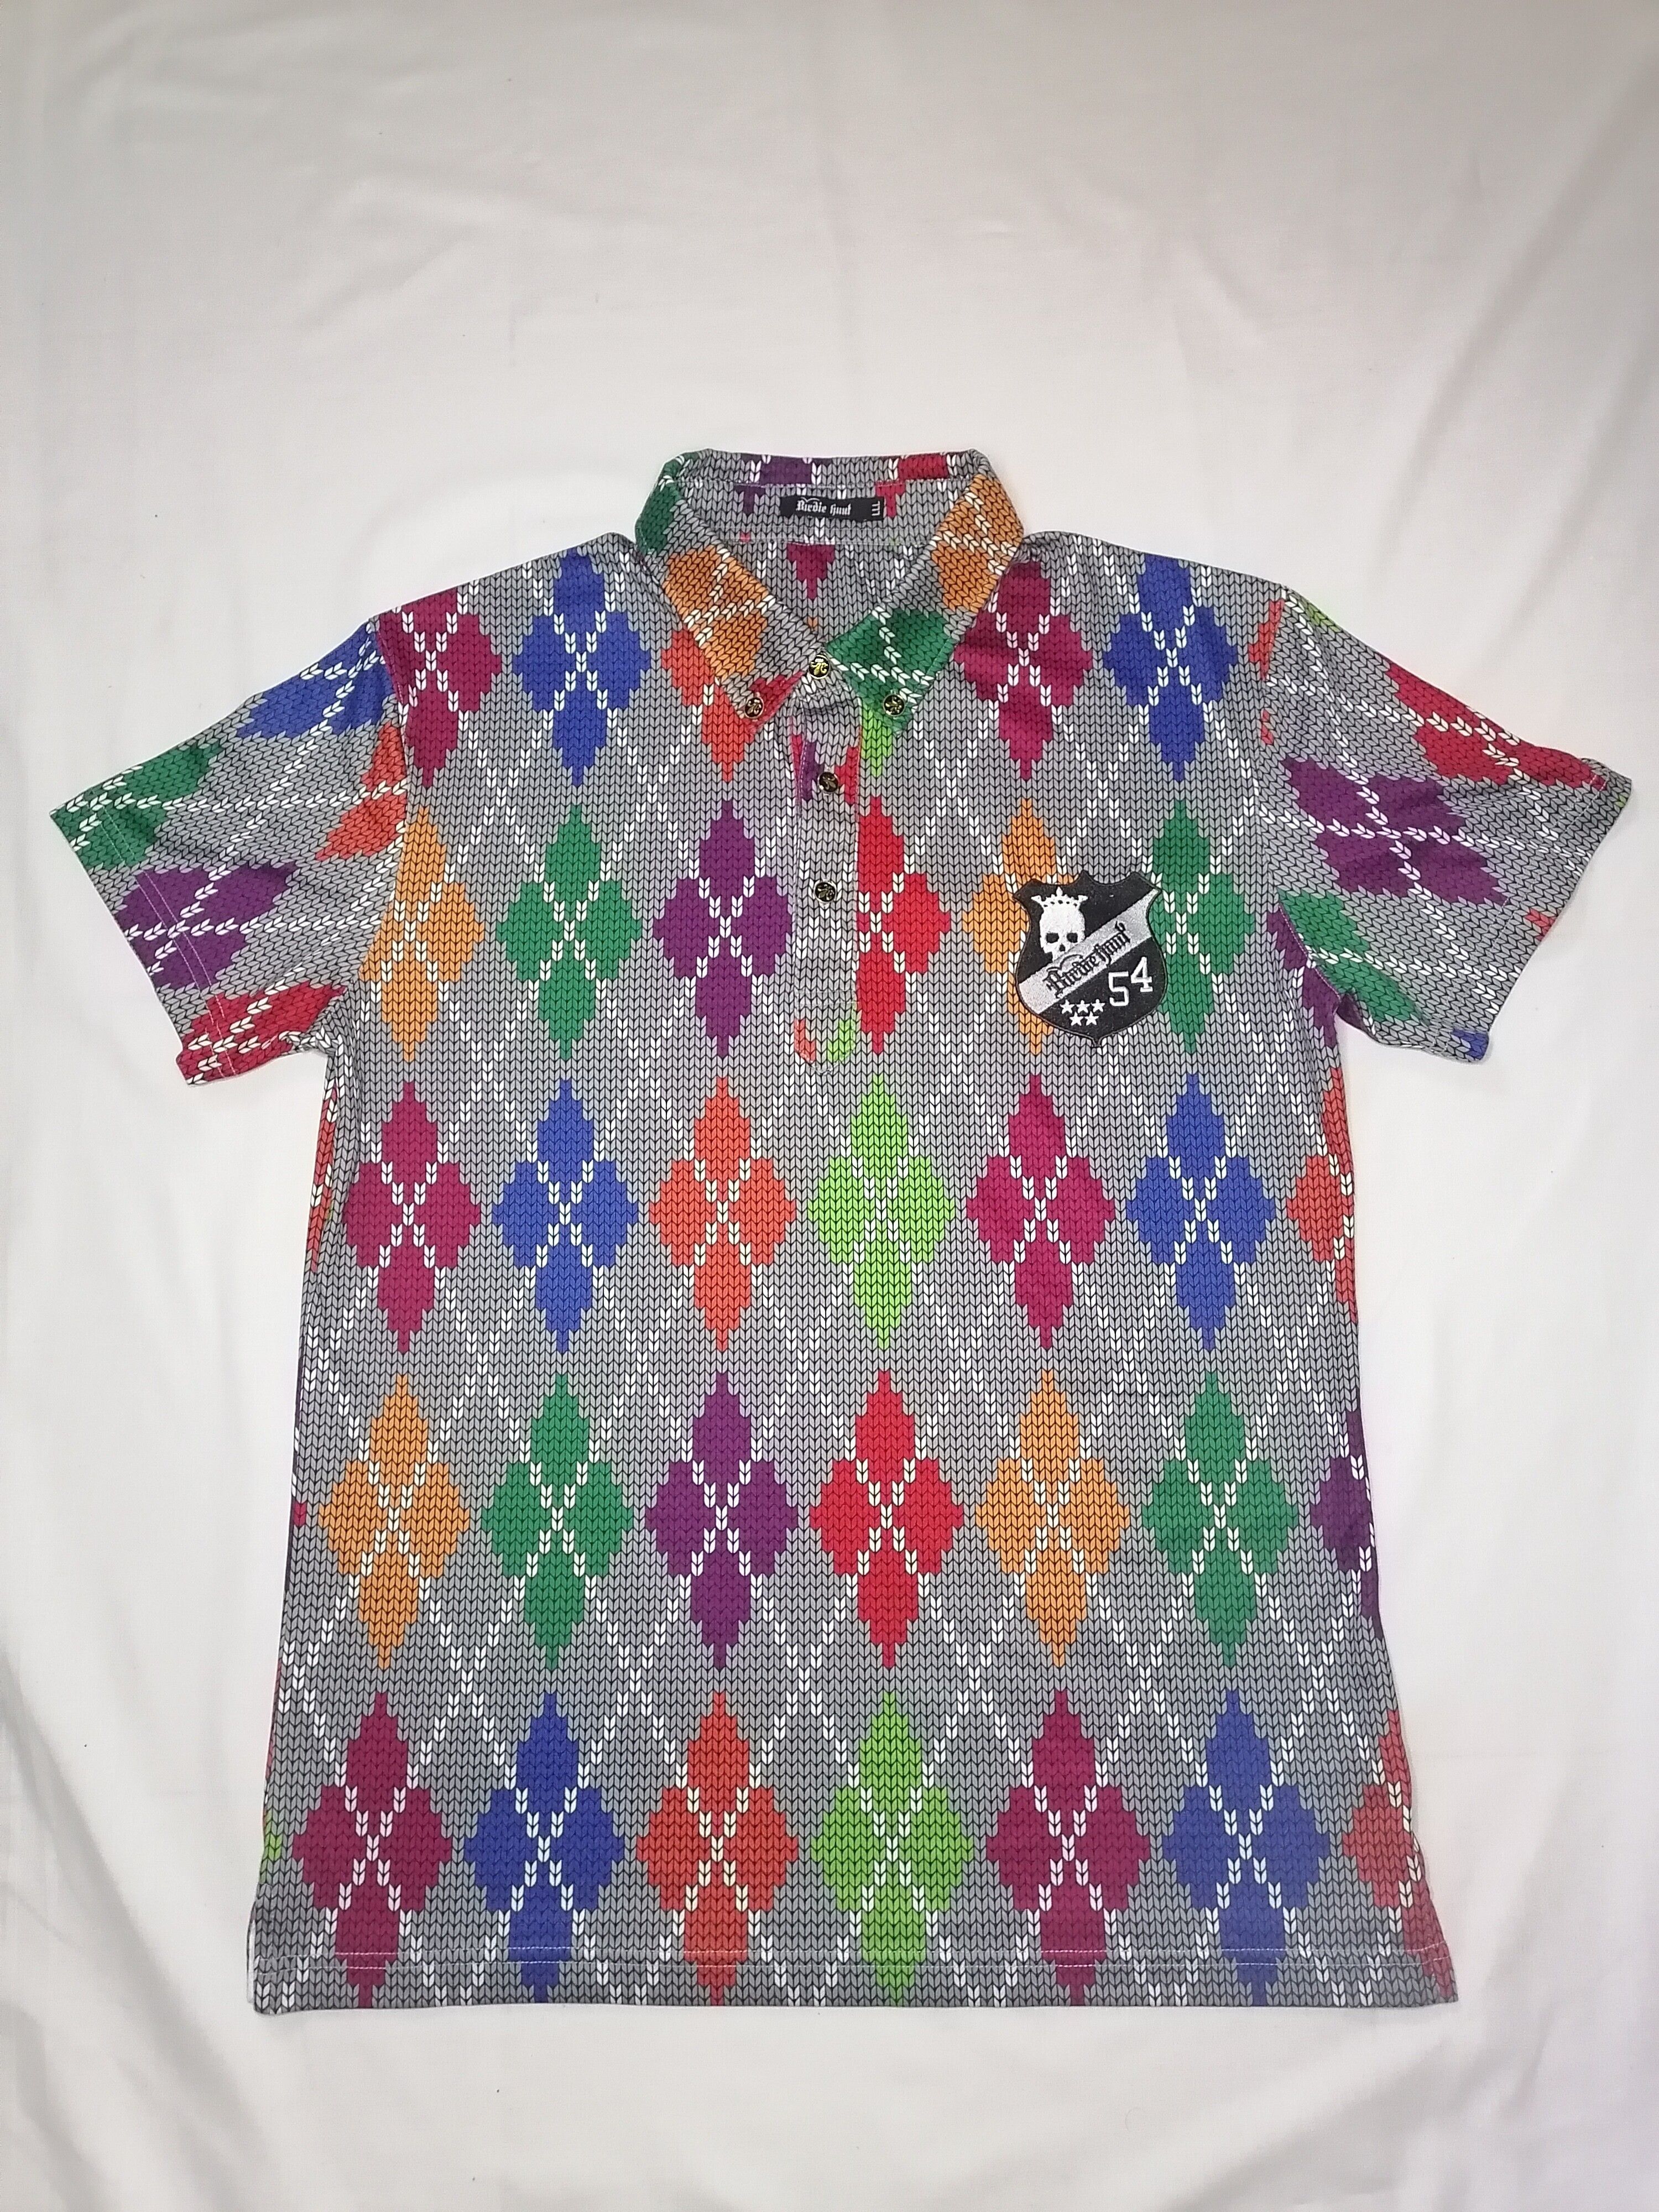 Very Rare BIRDIE HUNT colourfull/colourway rainbow shirt LIKE NEW! Size US XXL / EU 58 / 5 - 1 Preview